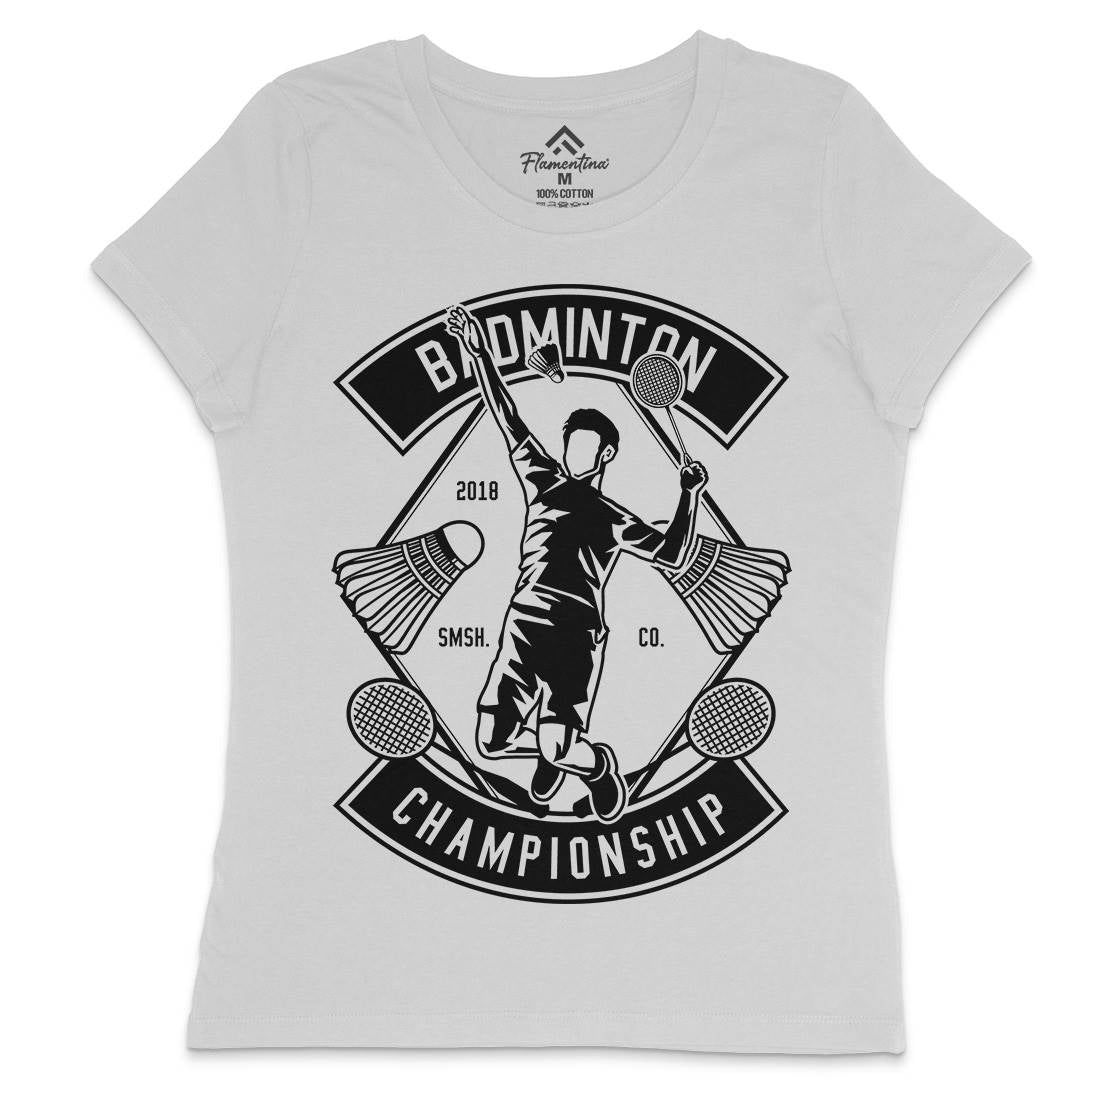 Badminton Championship Womens Crew Neck T-Shirt Sport B486